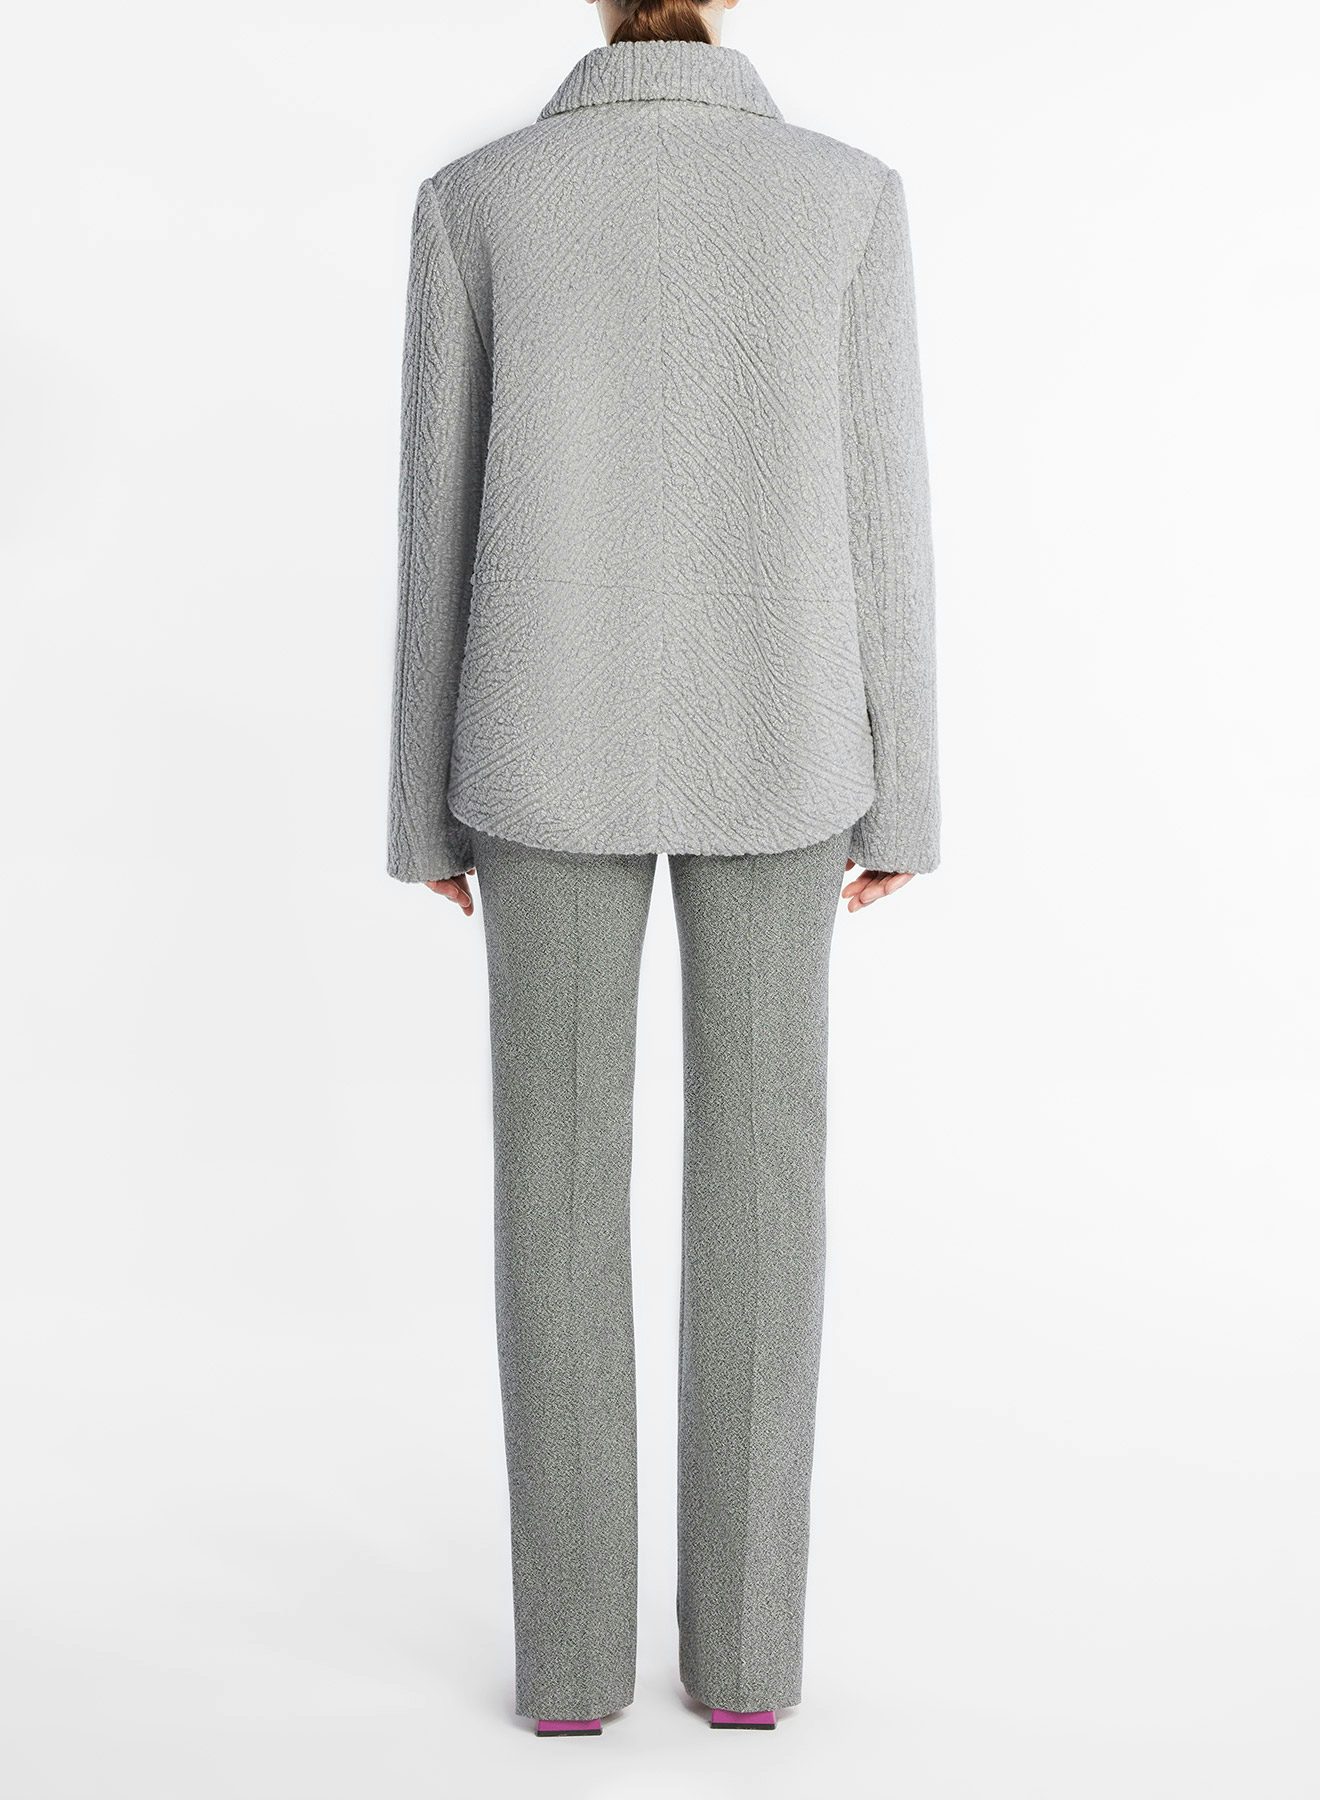 Speckled wool straight pant black white - Nina Ricci